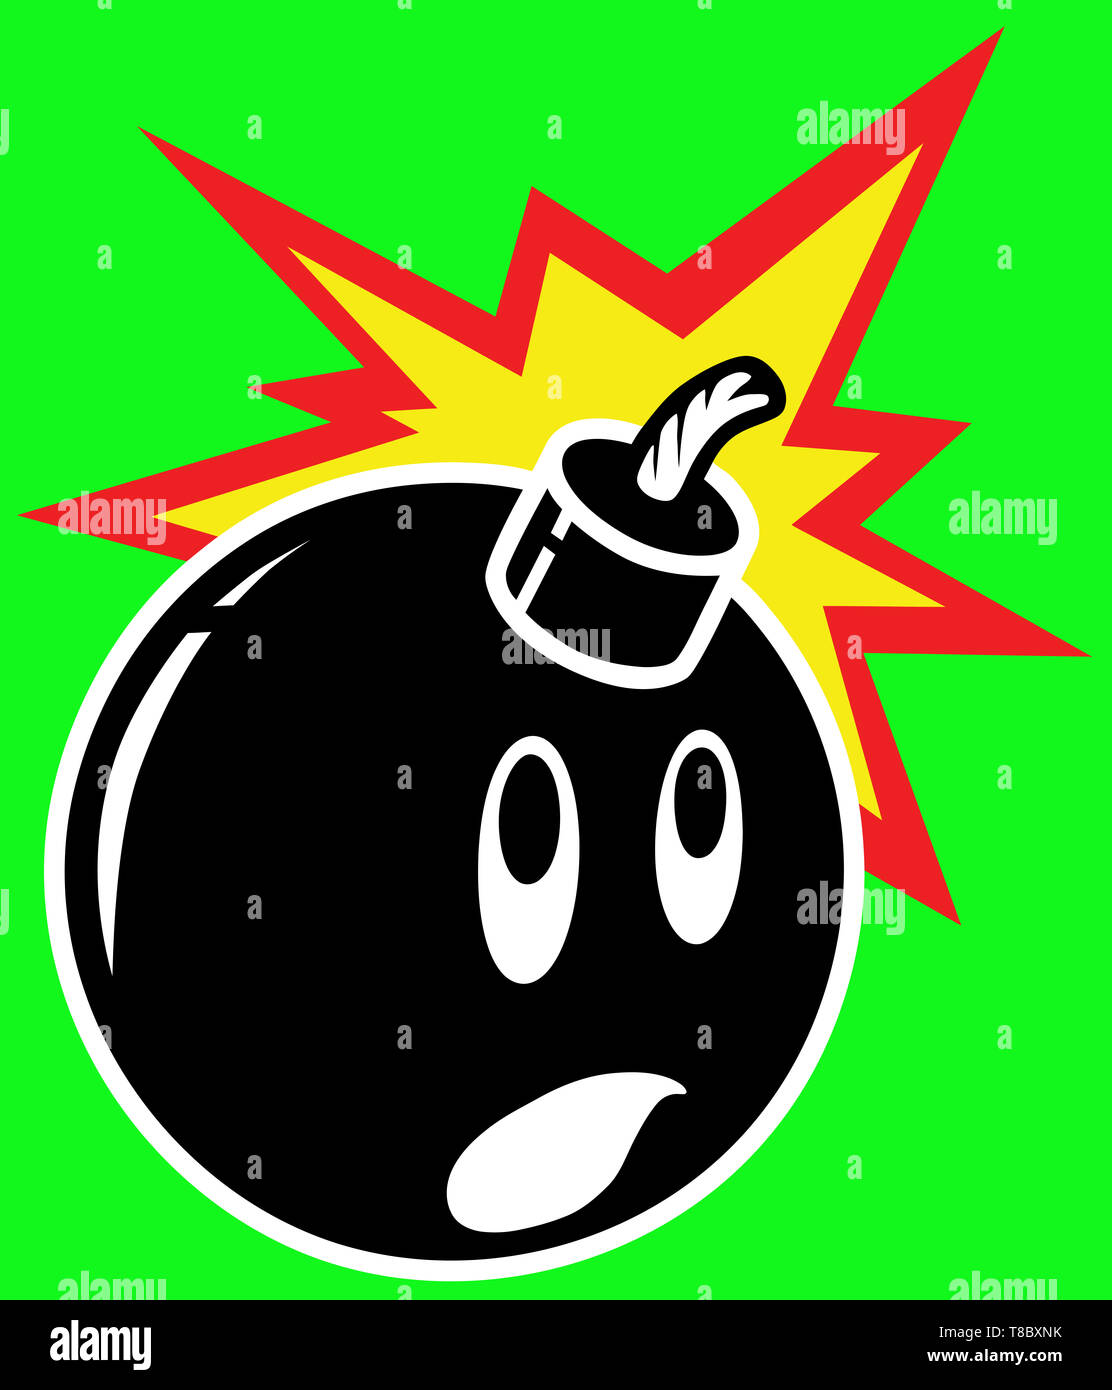 bomb ball black fire burning boom illustration face expression Stock Photo  - Alamy